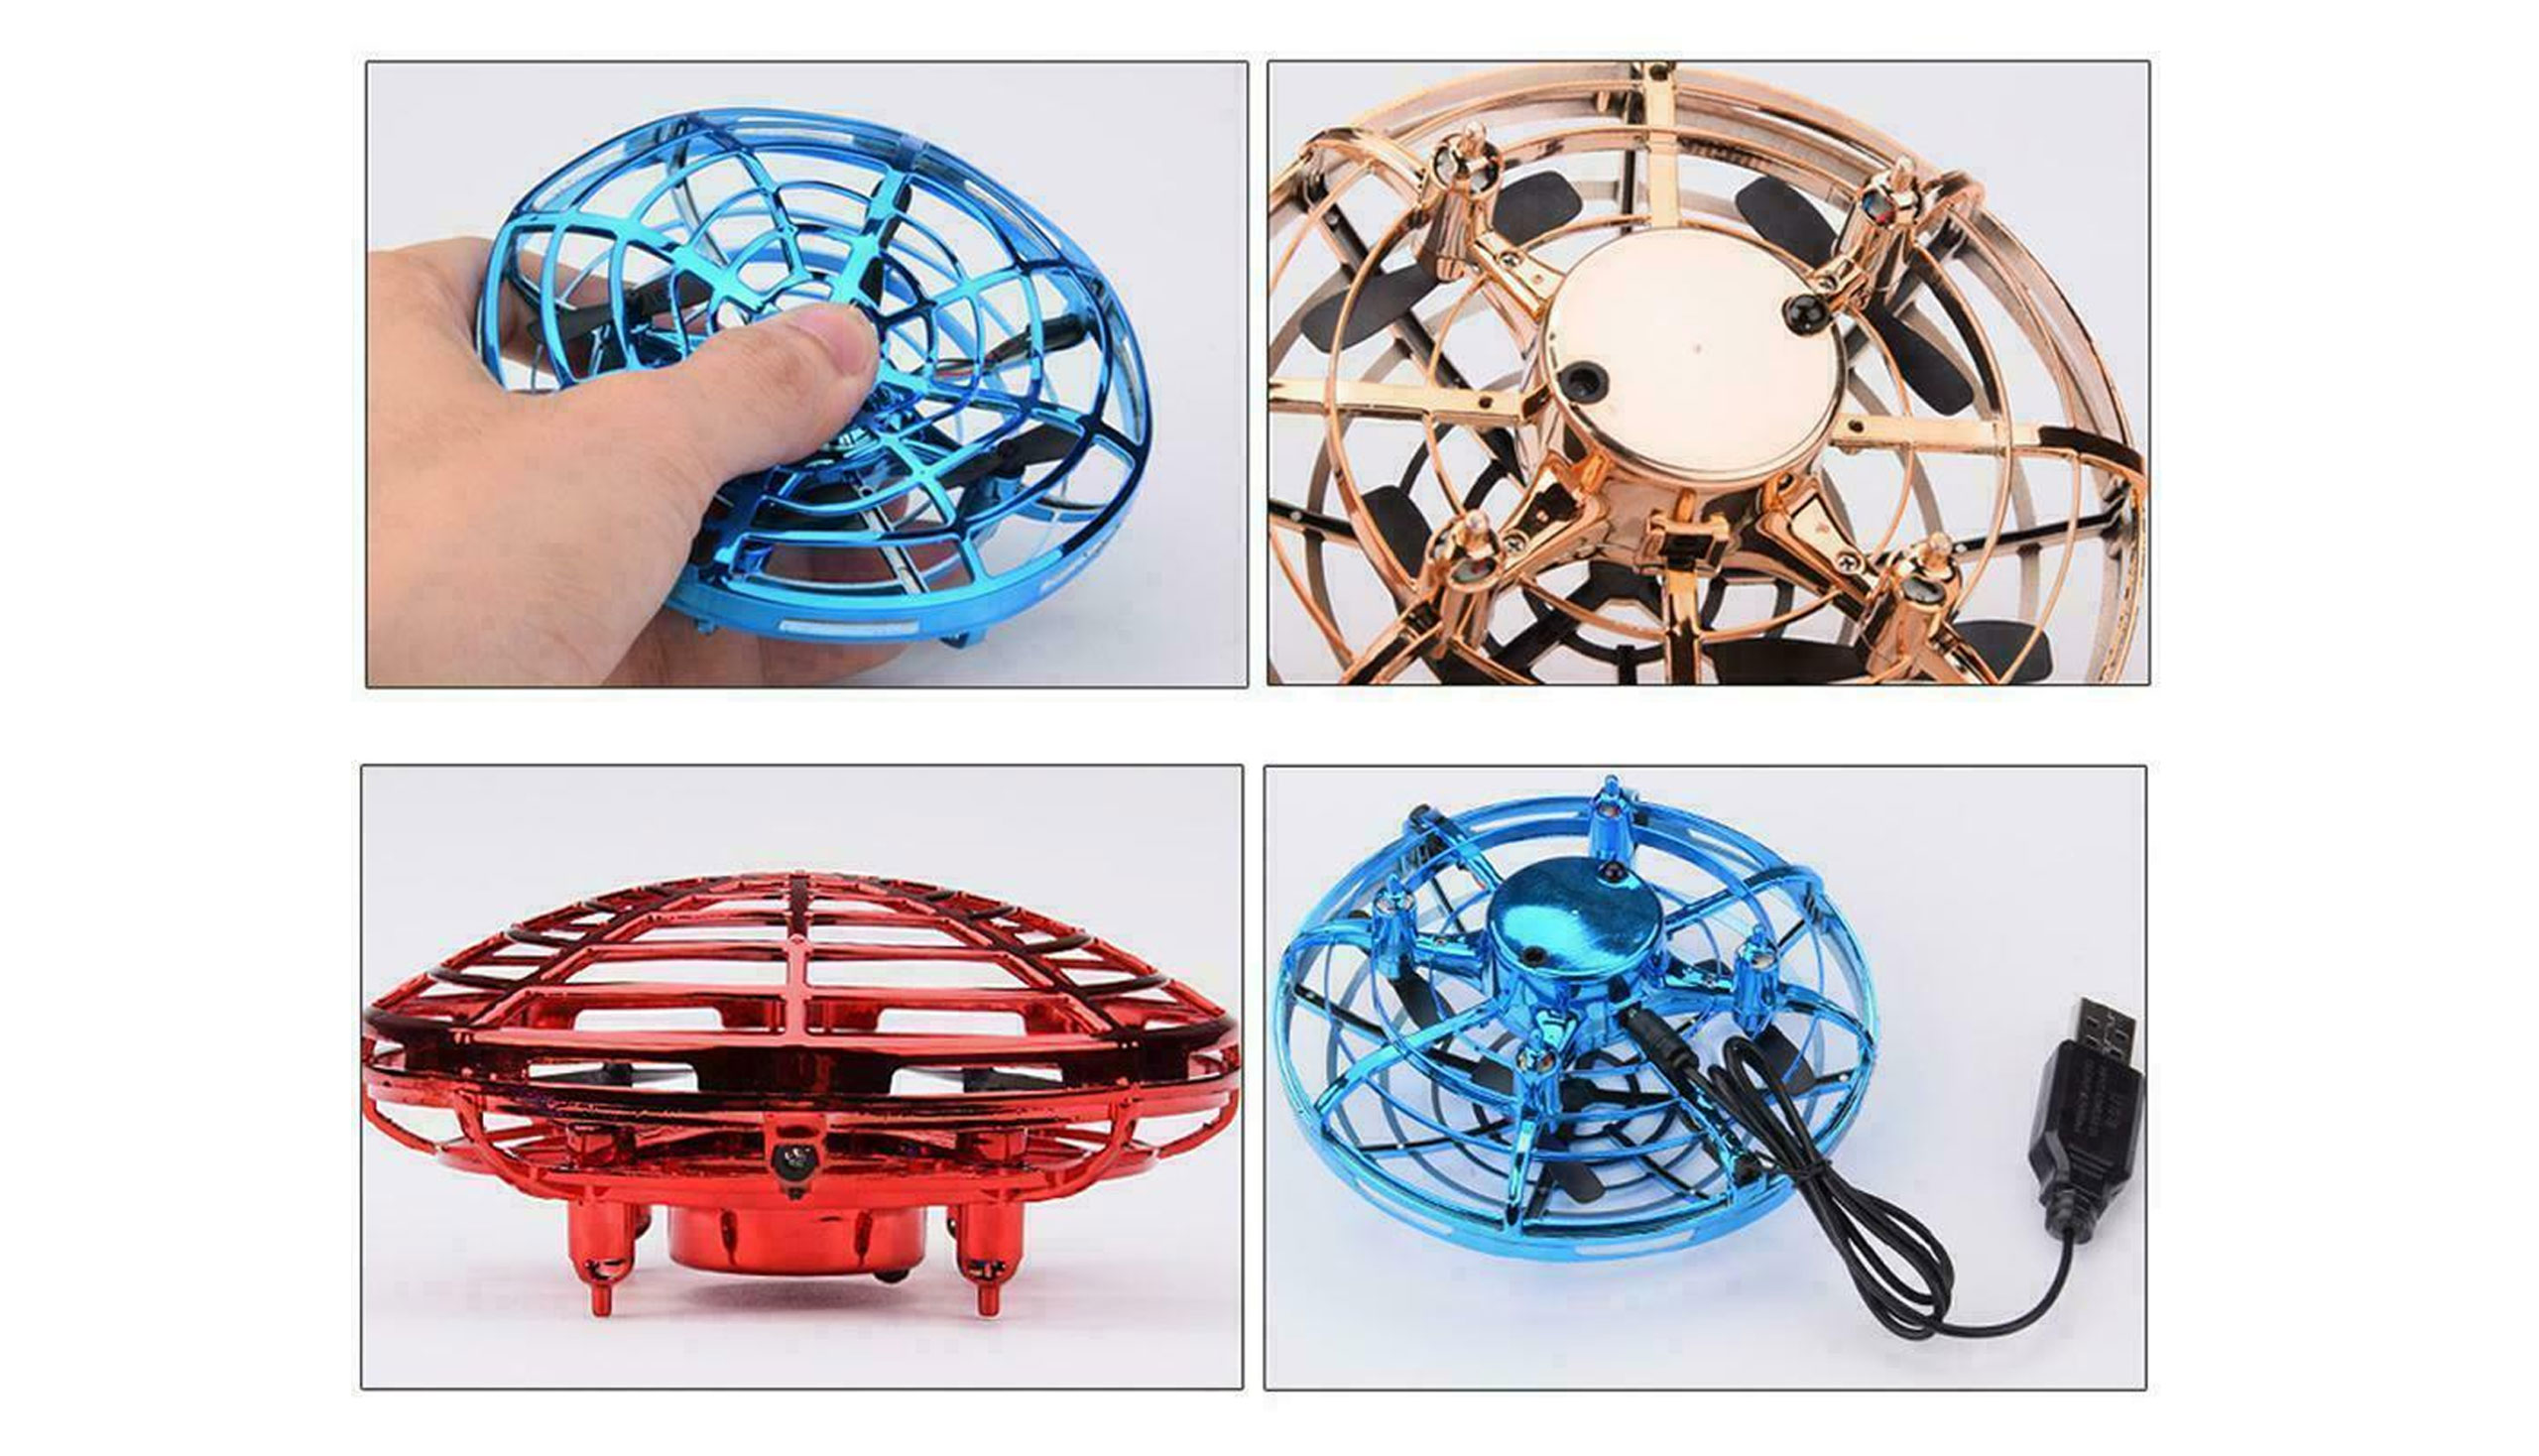 Dron UFO mini-dron ovládaný rukou, senzory proti nárazu, RTF, modrý